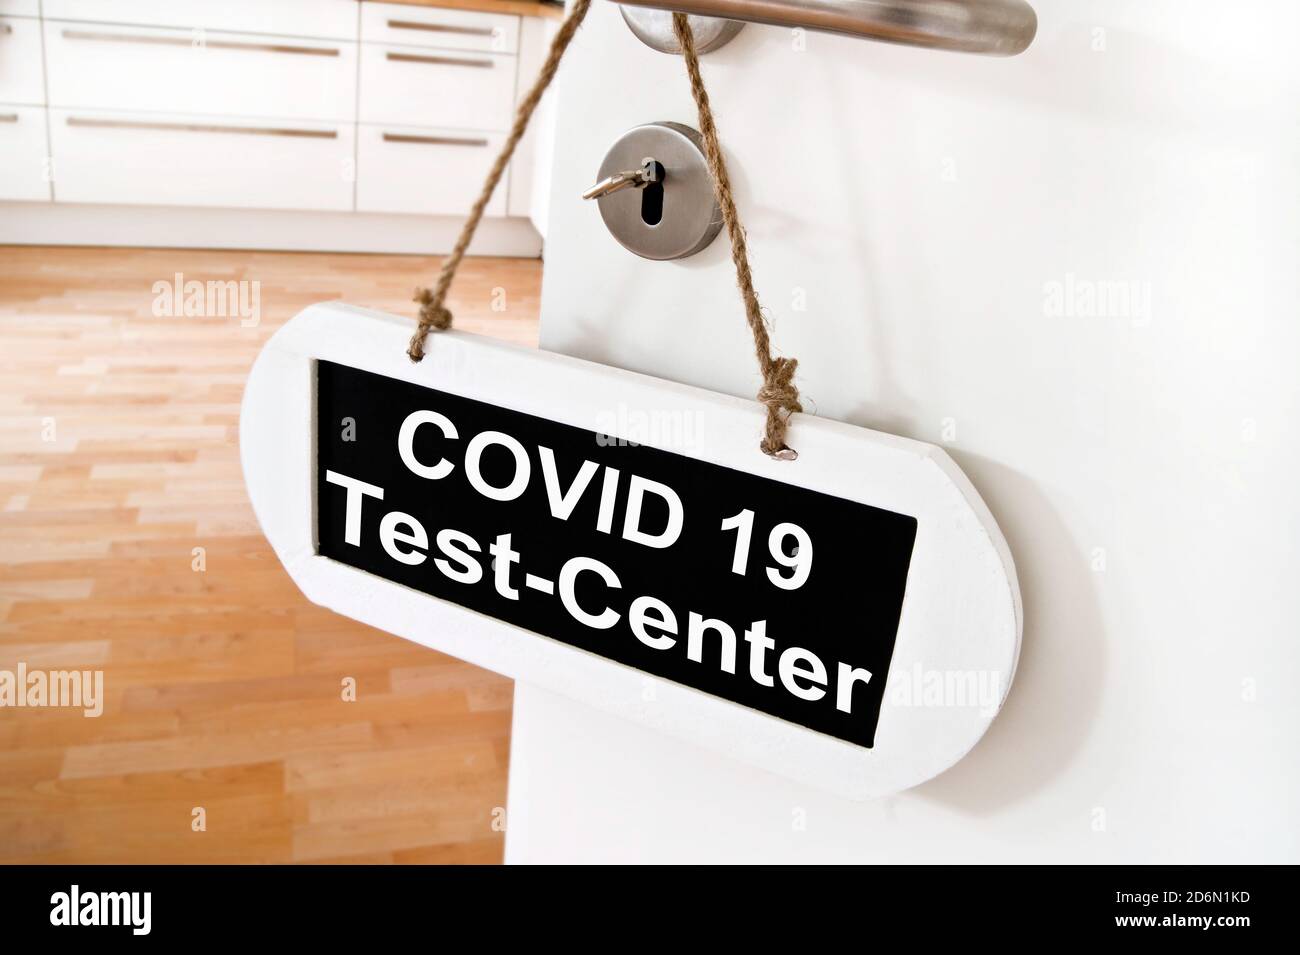 Corona Virus Covi 19 Konzept Tür mit Swild Covid 19 Centro di test Foto Stock